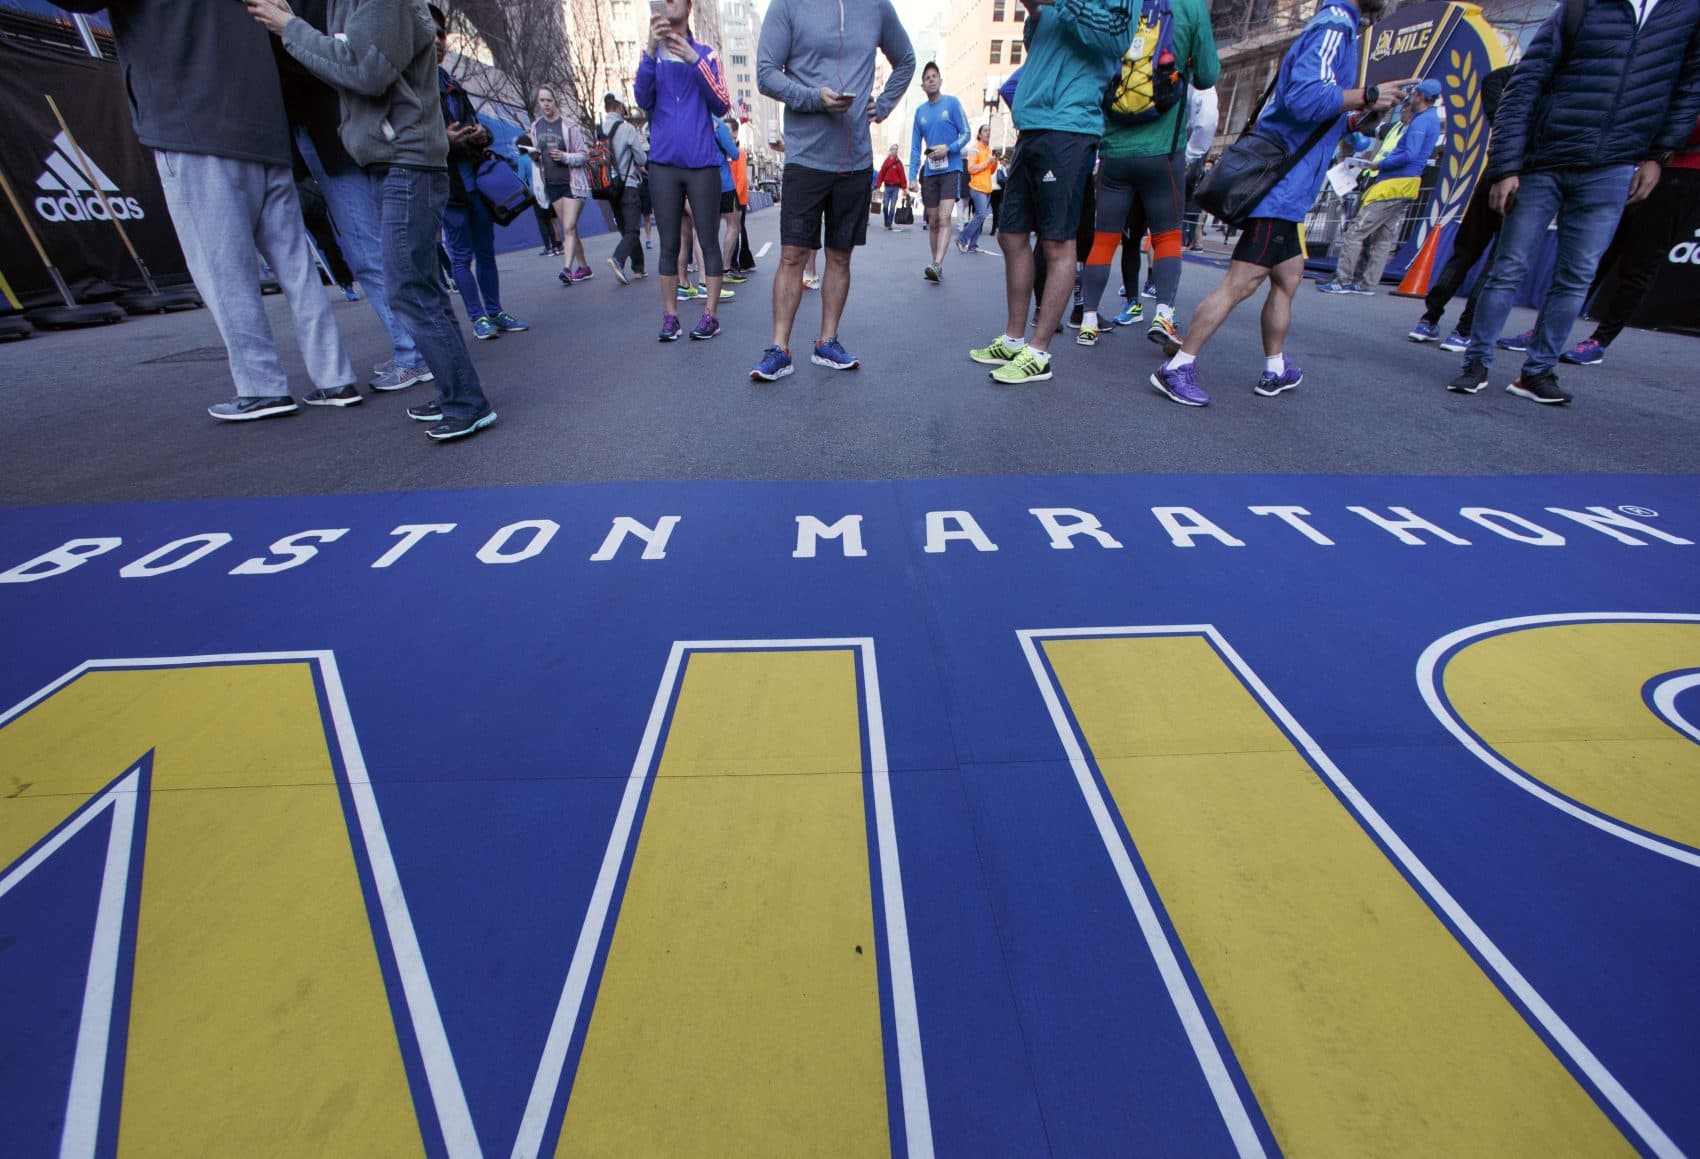 People gather at the Boston Marathon finish line on Saturday. (Michael Dwyer/AP)